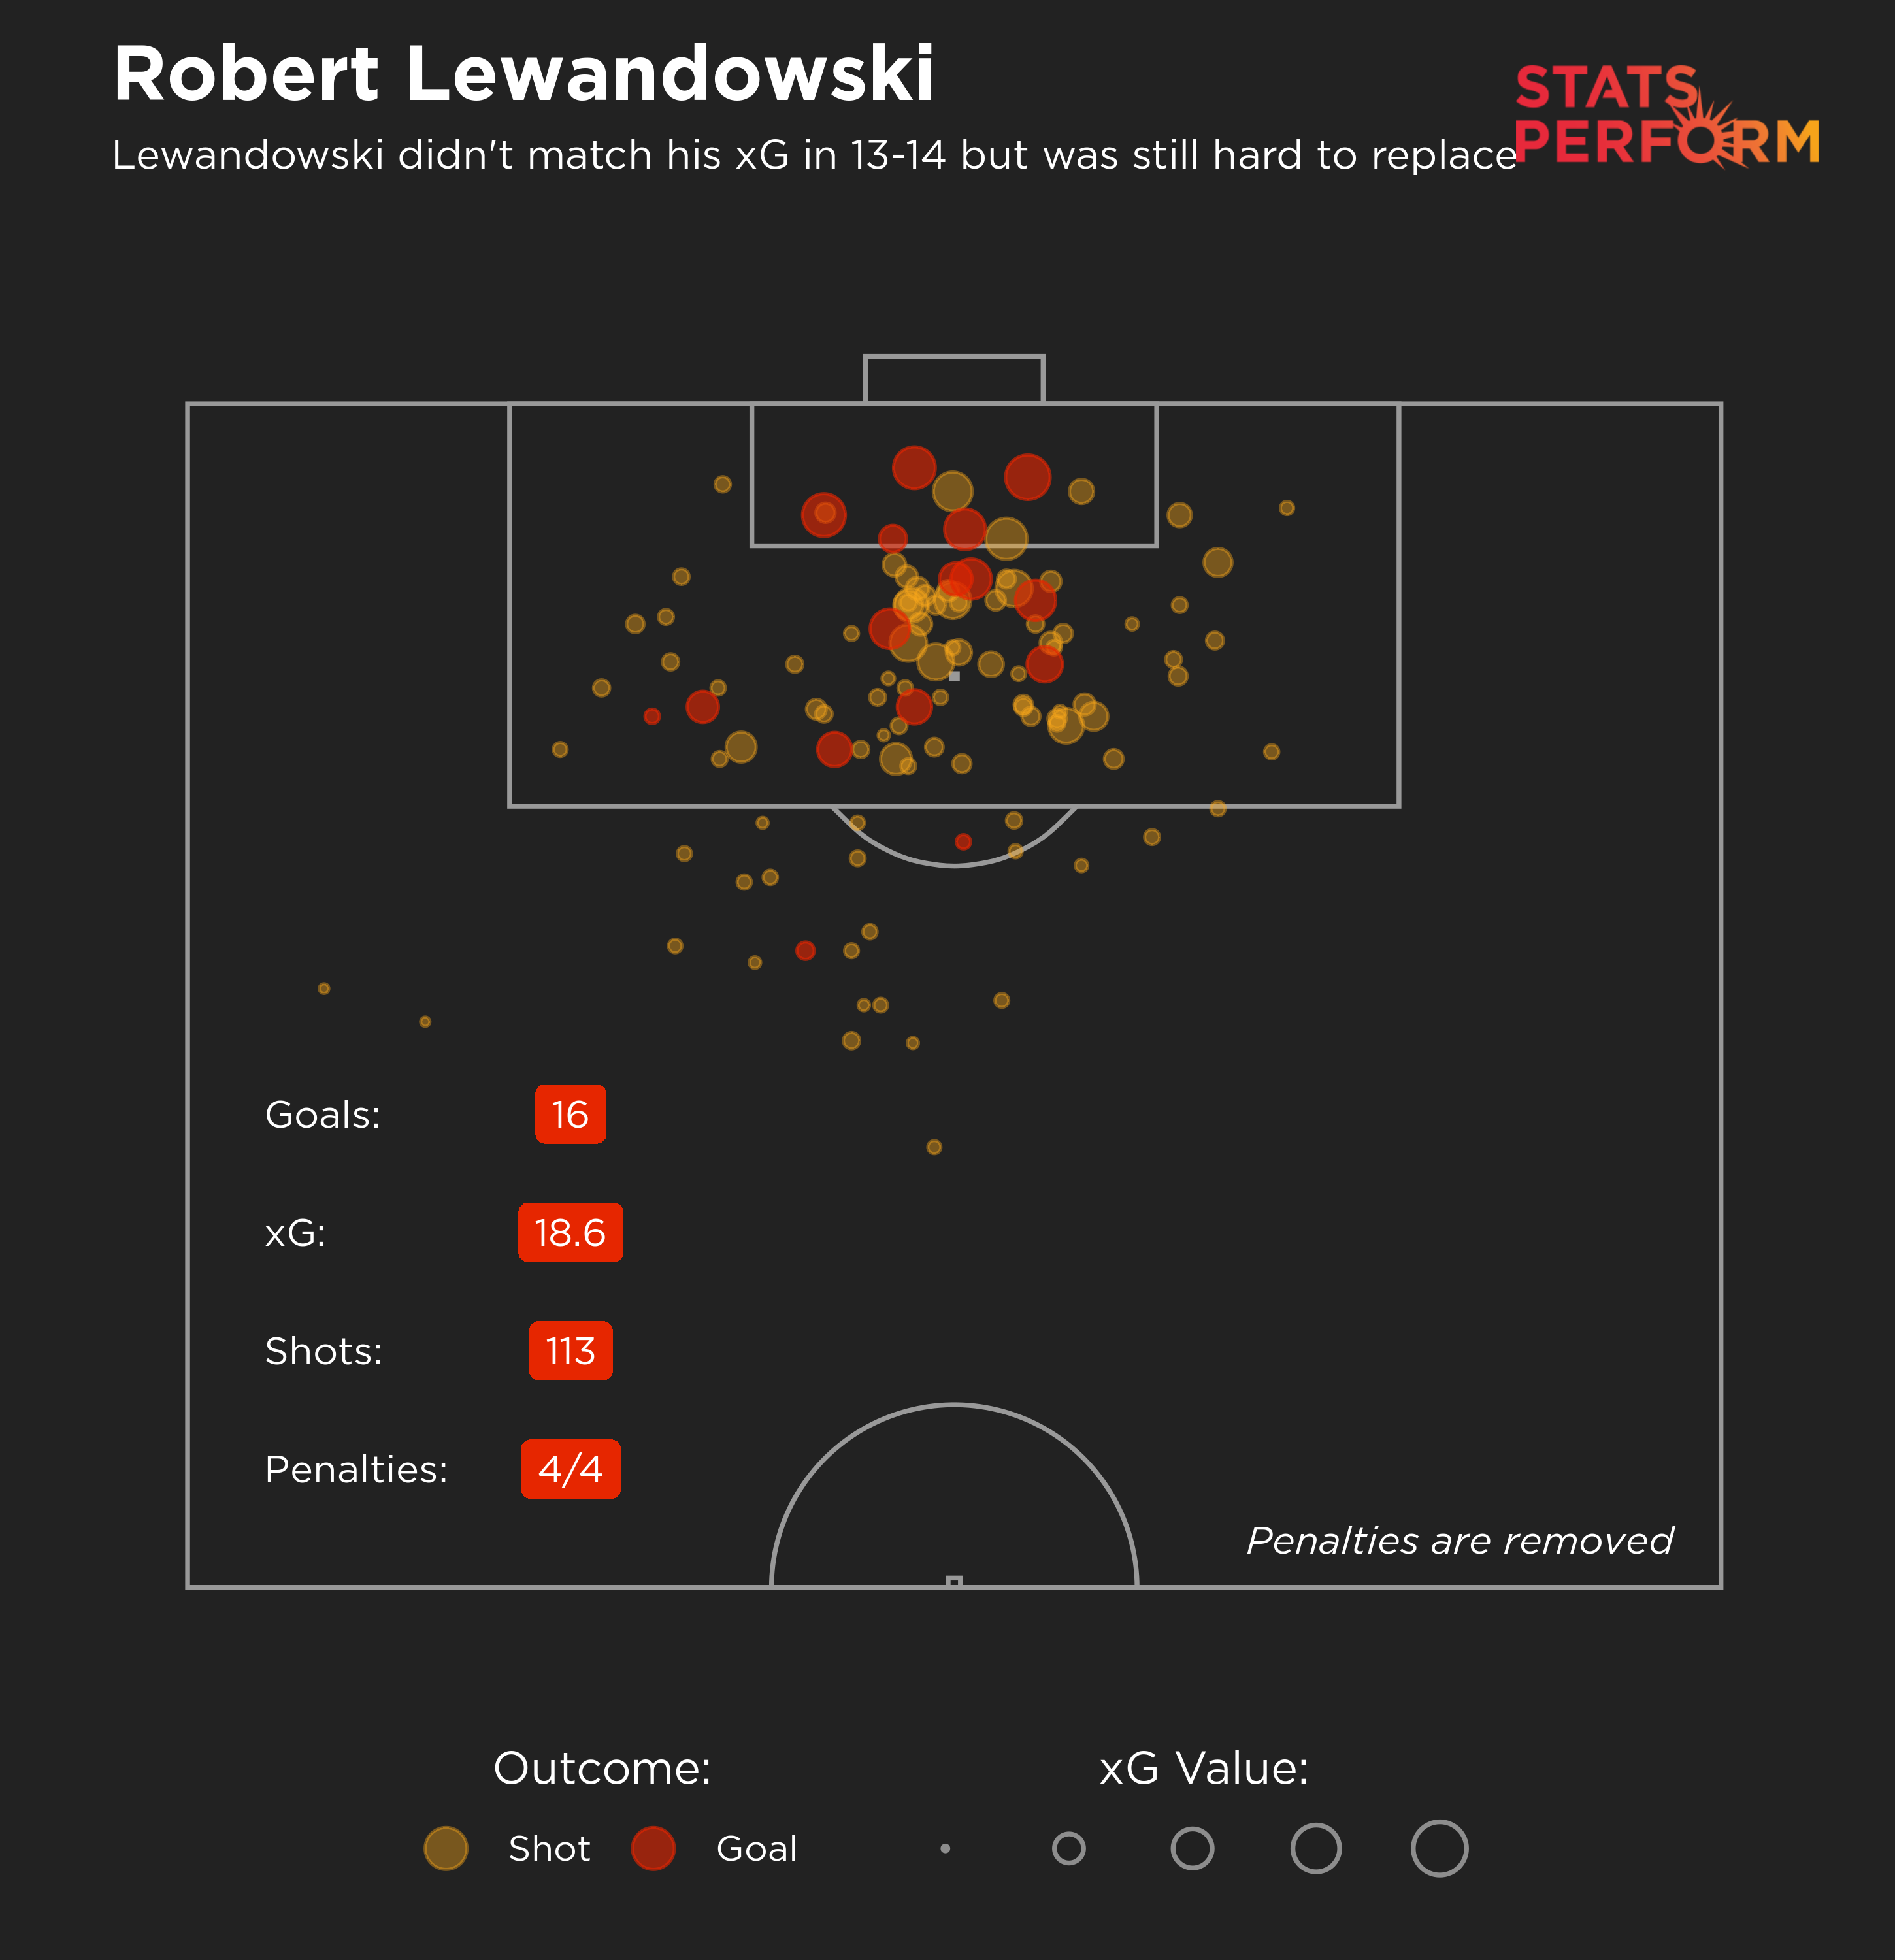 Robert Lewandowski didn't match his xG in 2013-14 but was still hard to replace